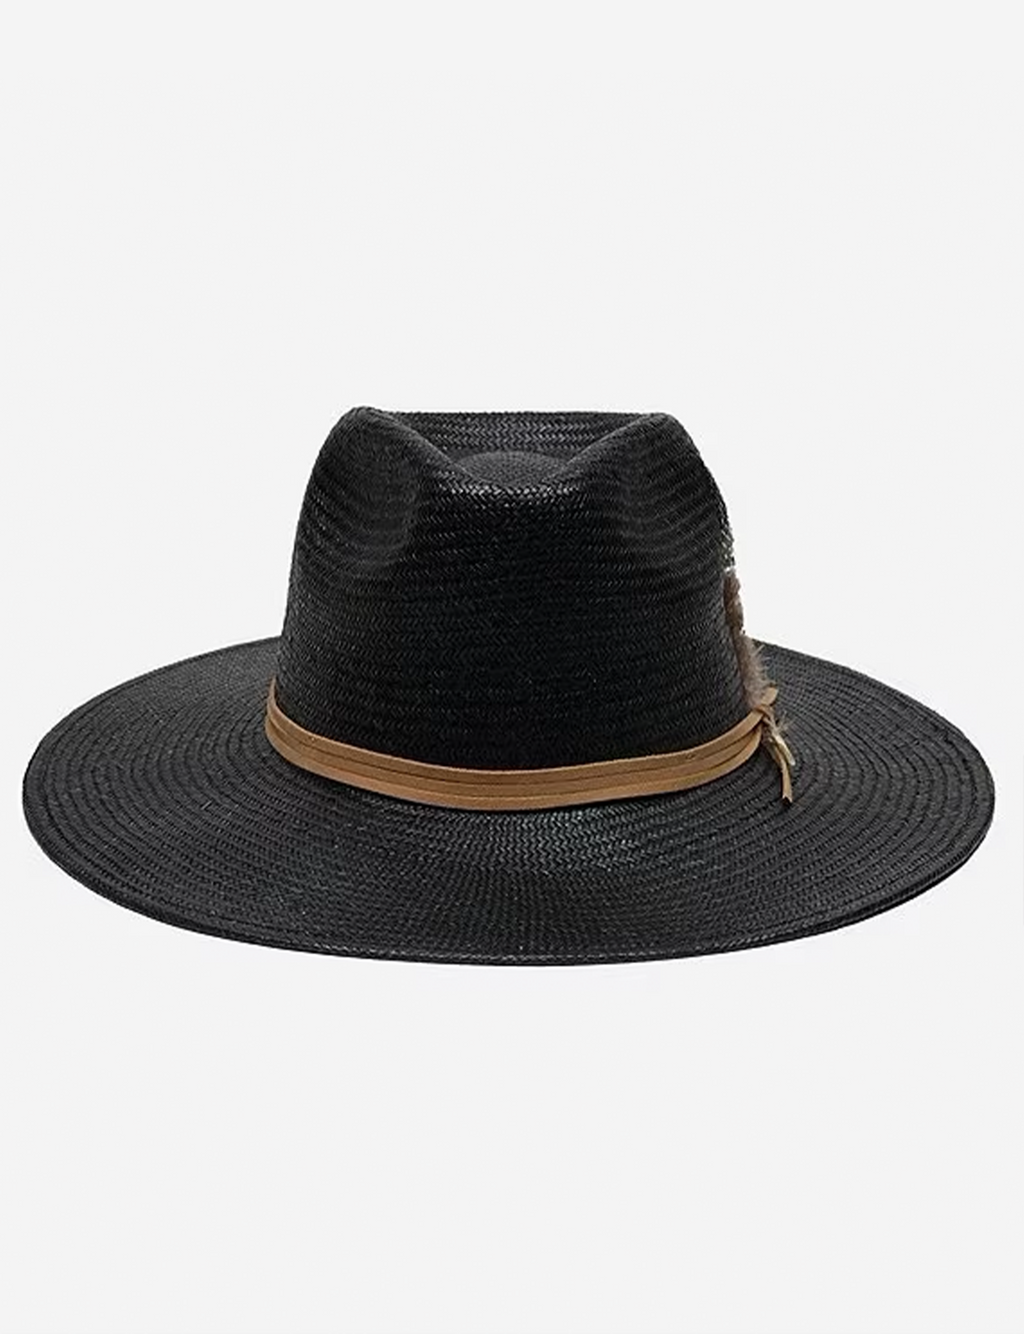 Valencia Straw Hat, Black